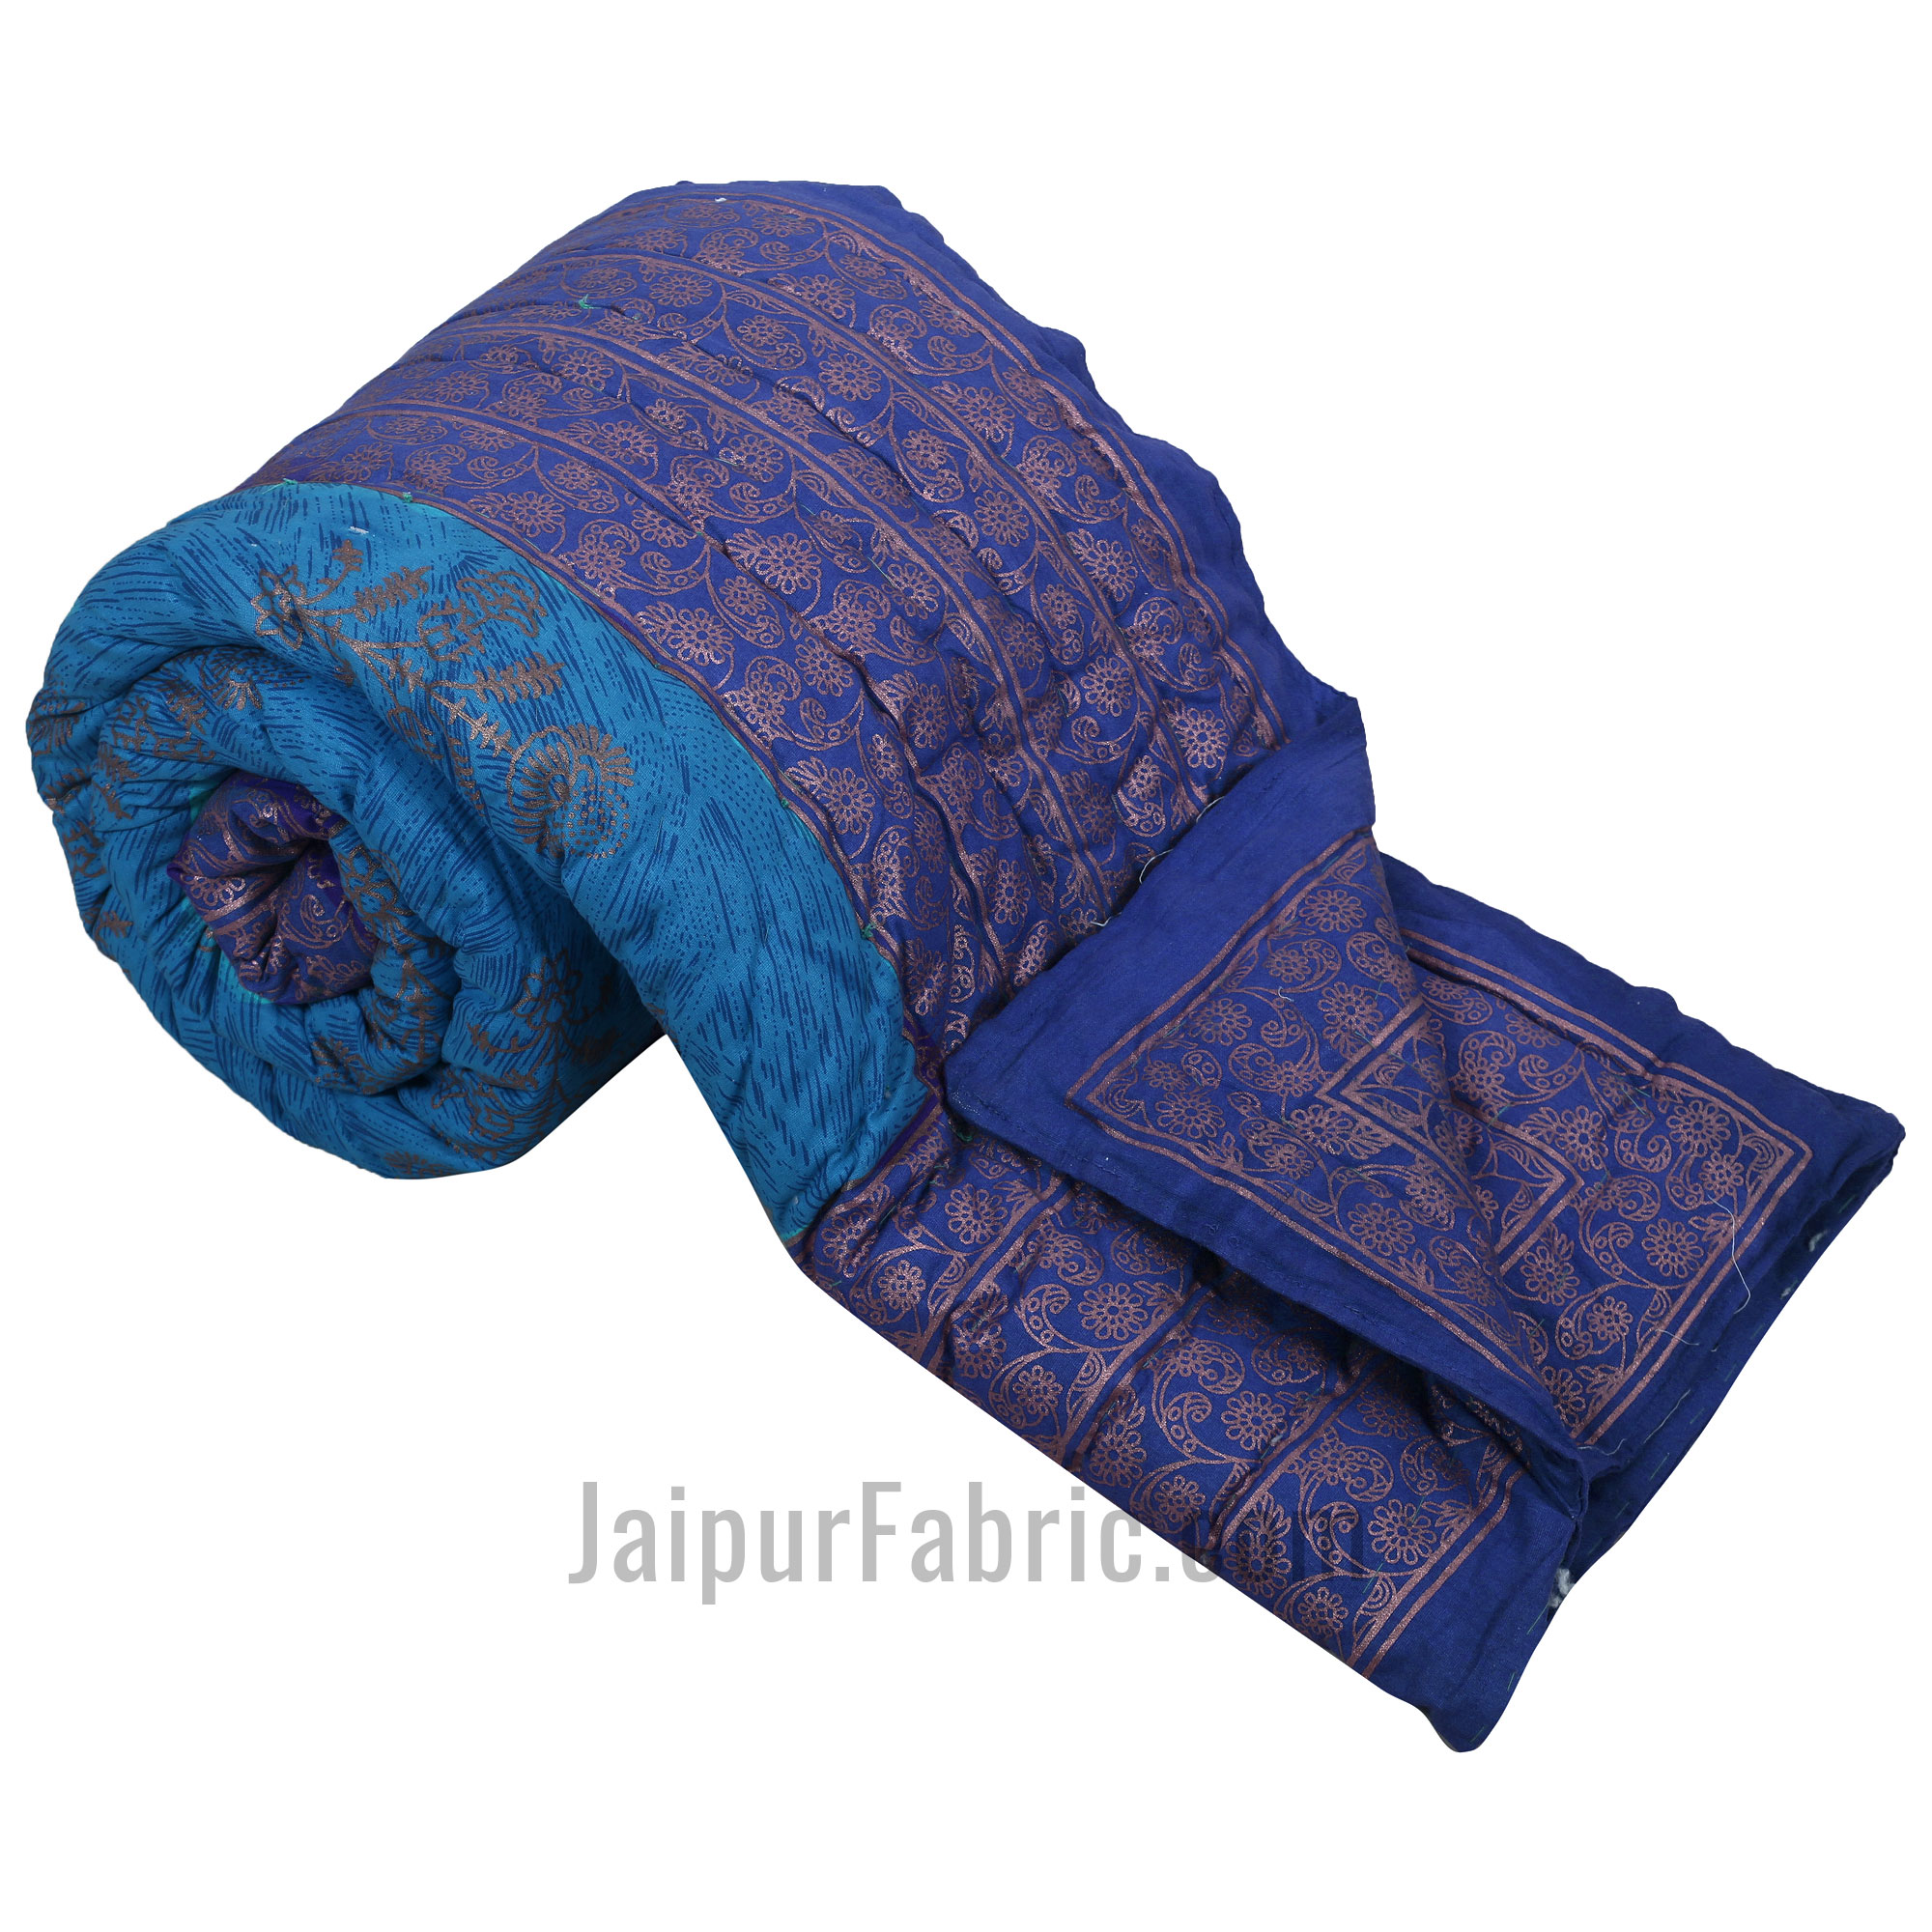 Jaipuri Printed Single Bed Razai Golden Blue and Purple with Paisley pattern